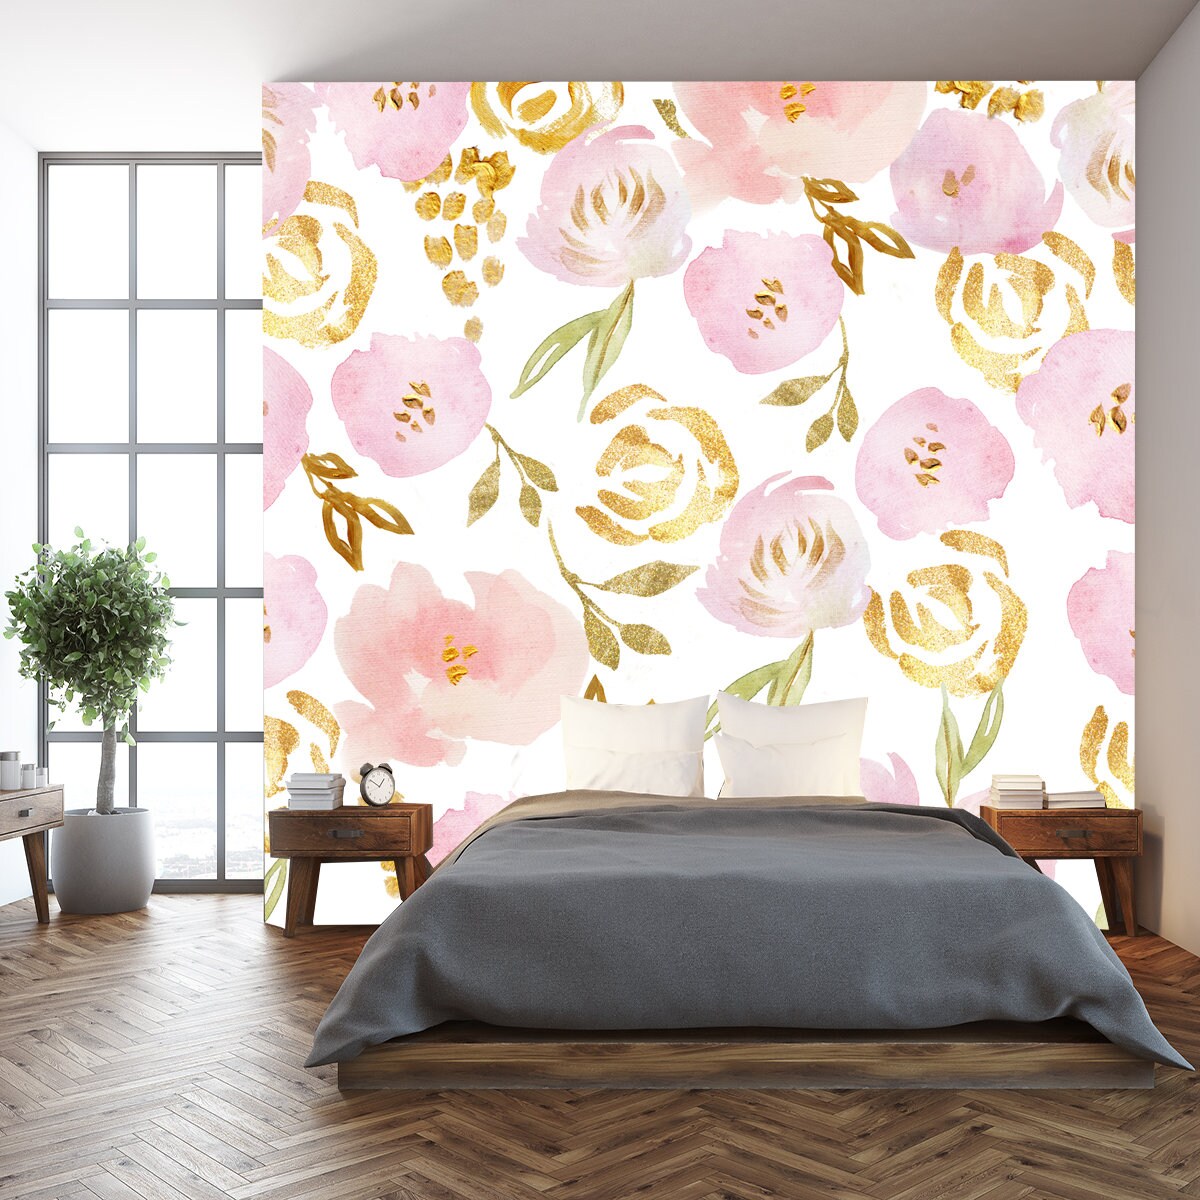 Watercolor Rose and Glitter Flower Wallpaper Bedroom Mural